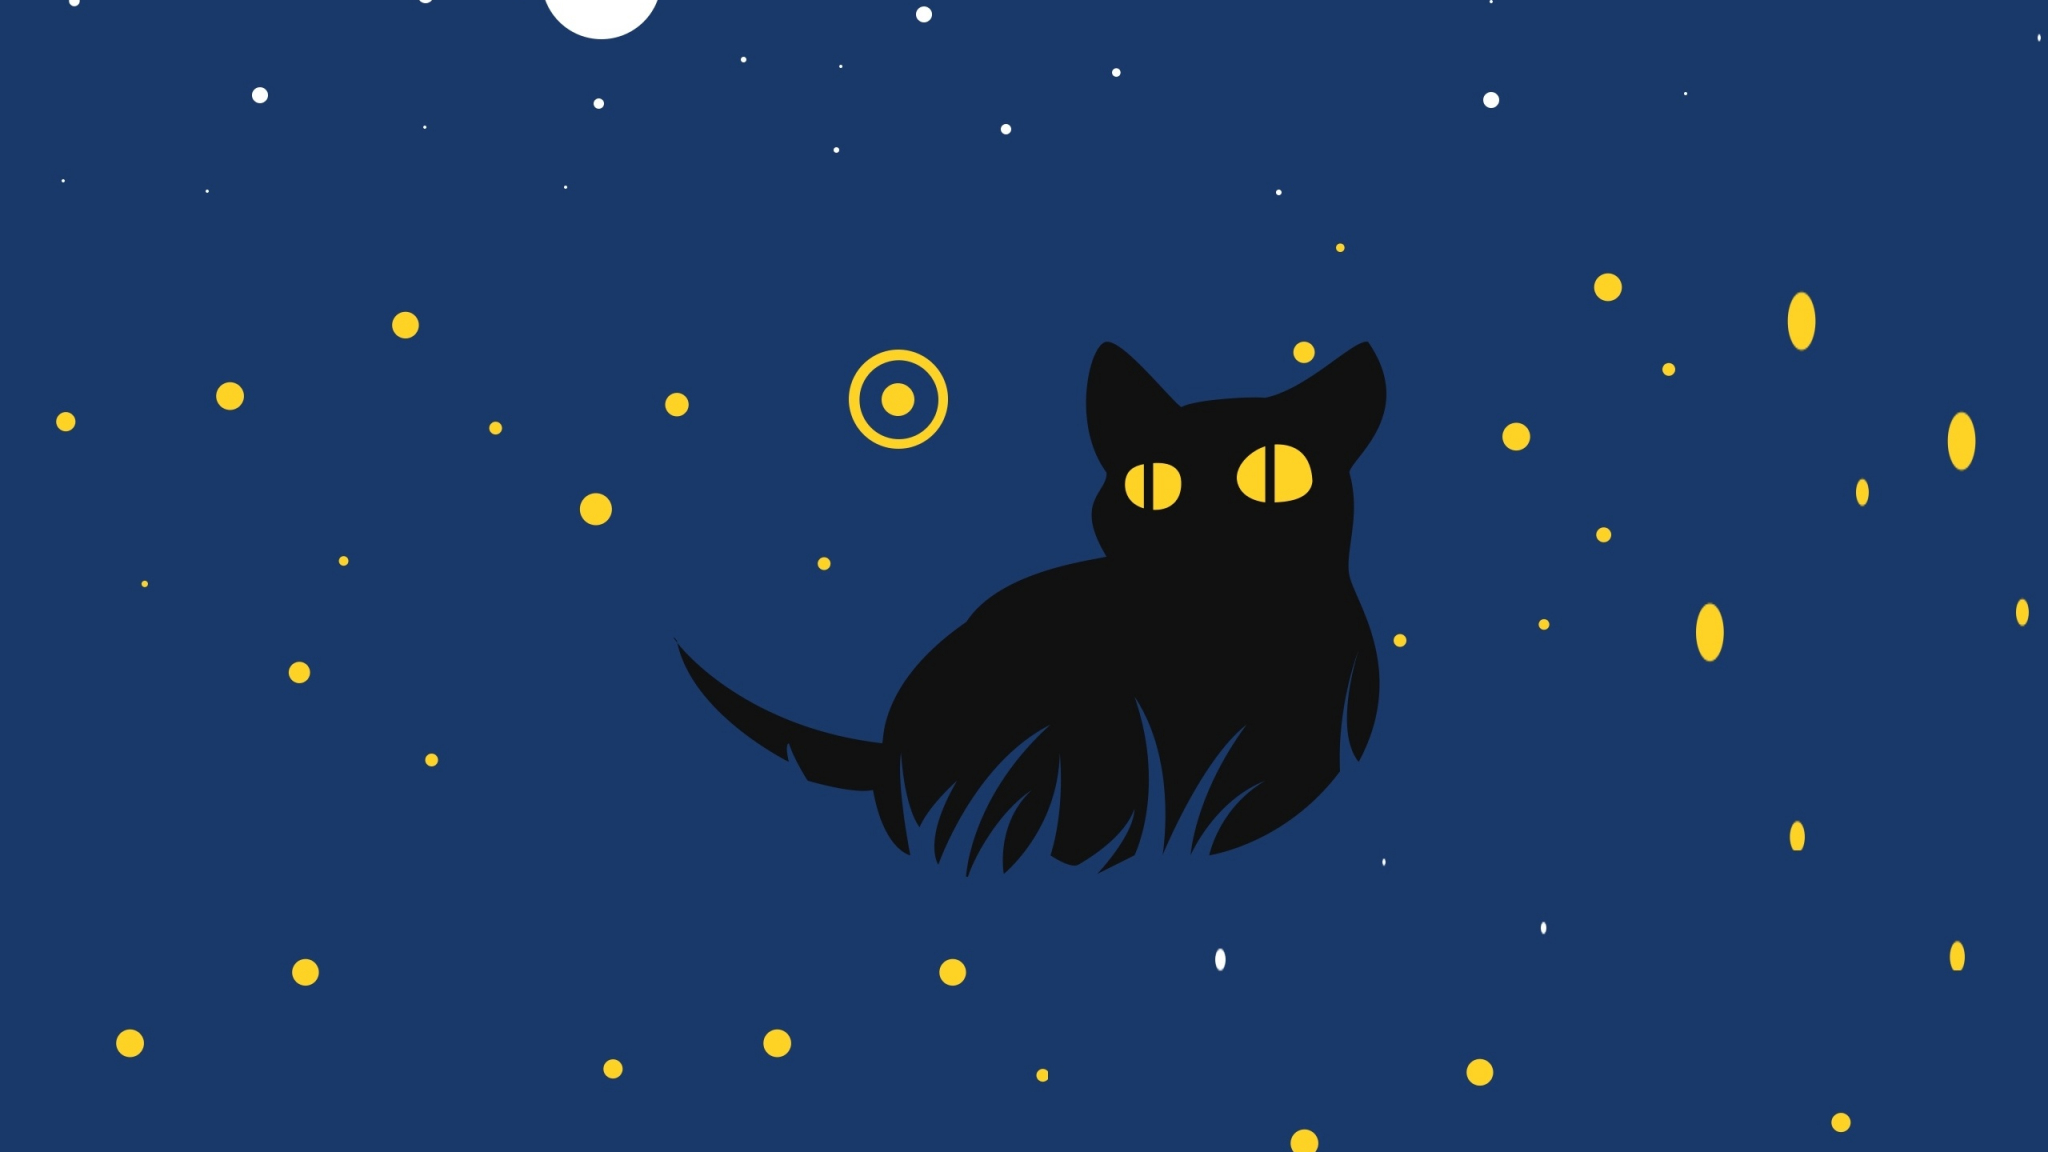 Download 2048x1152 Wallpaper Cute Black Cat Minimal Art Dual Wide Widescreen 2048x1152 Hd Image Background 15825